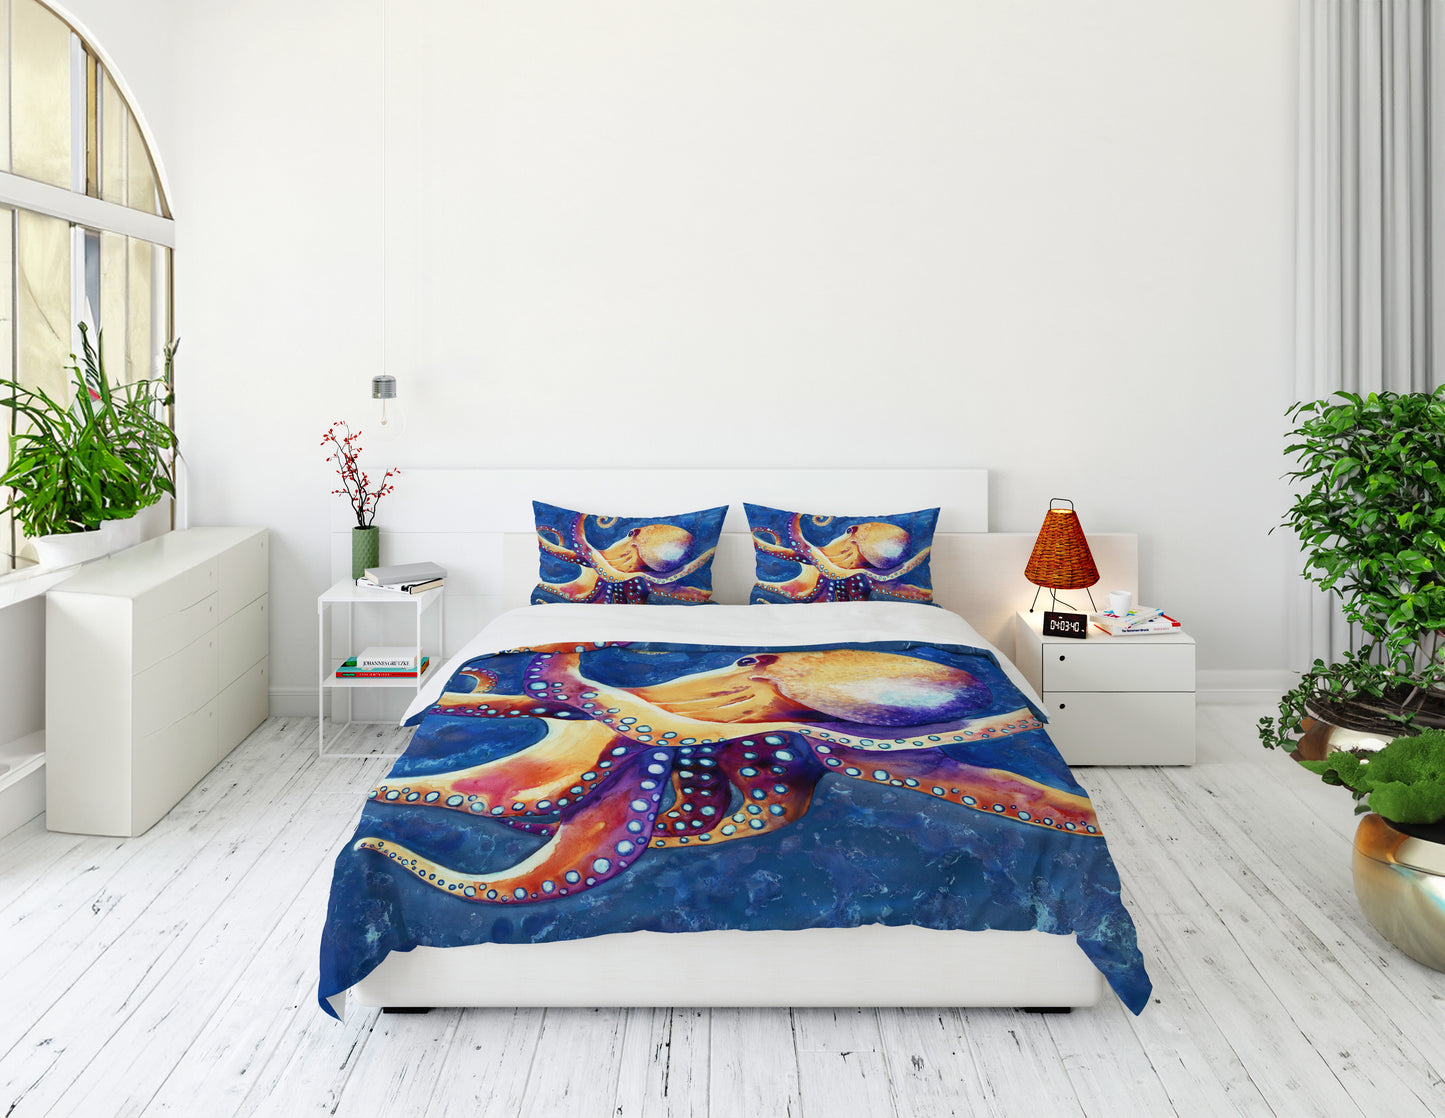 Octopus Duvet Cover or Comforter